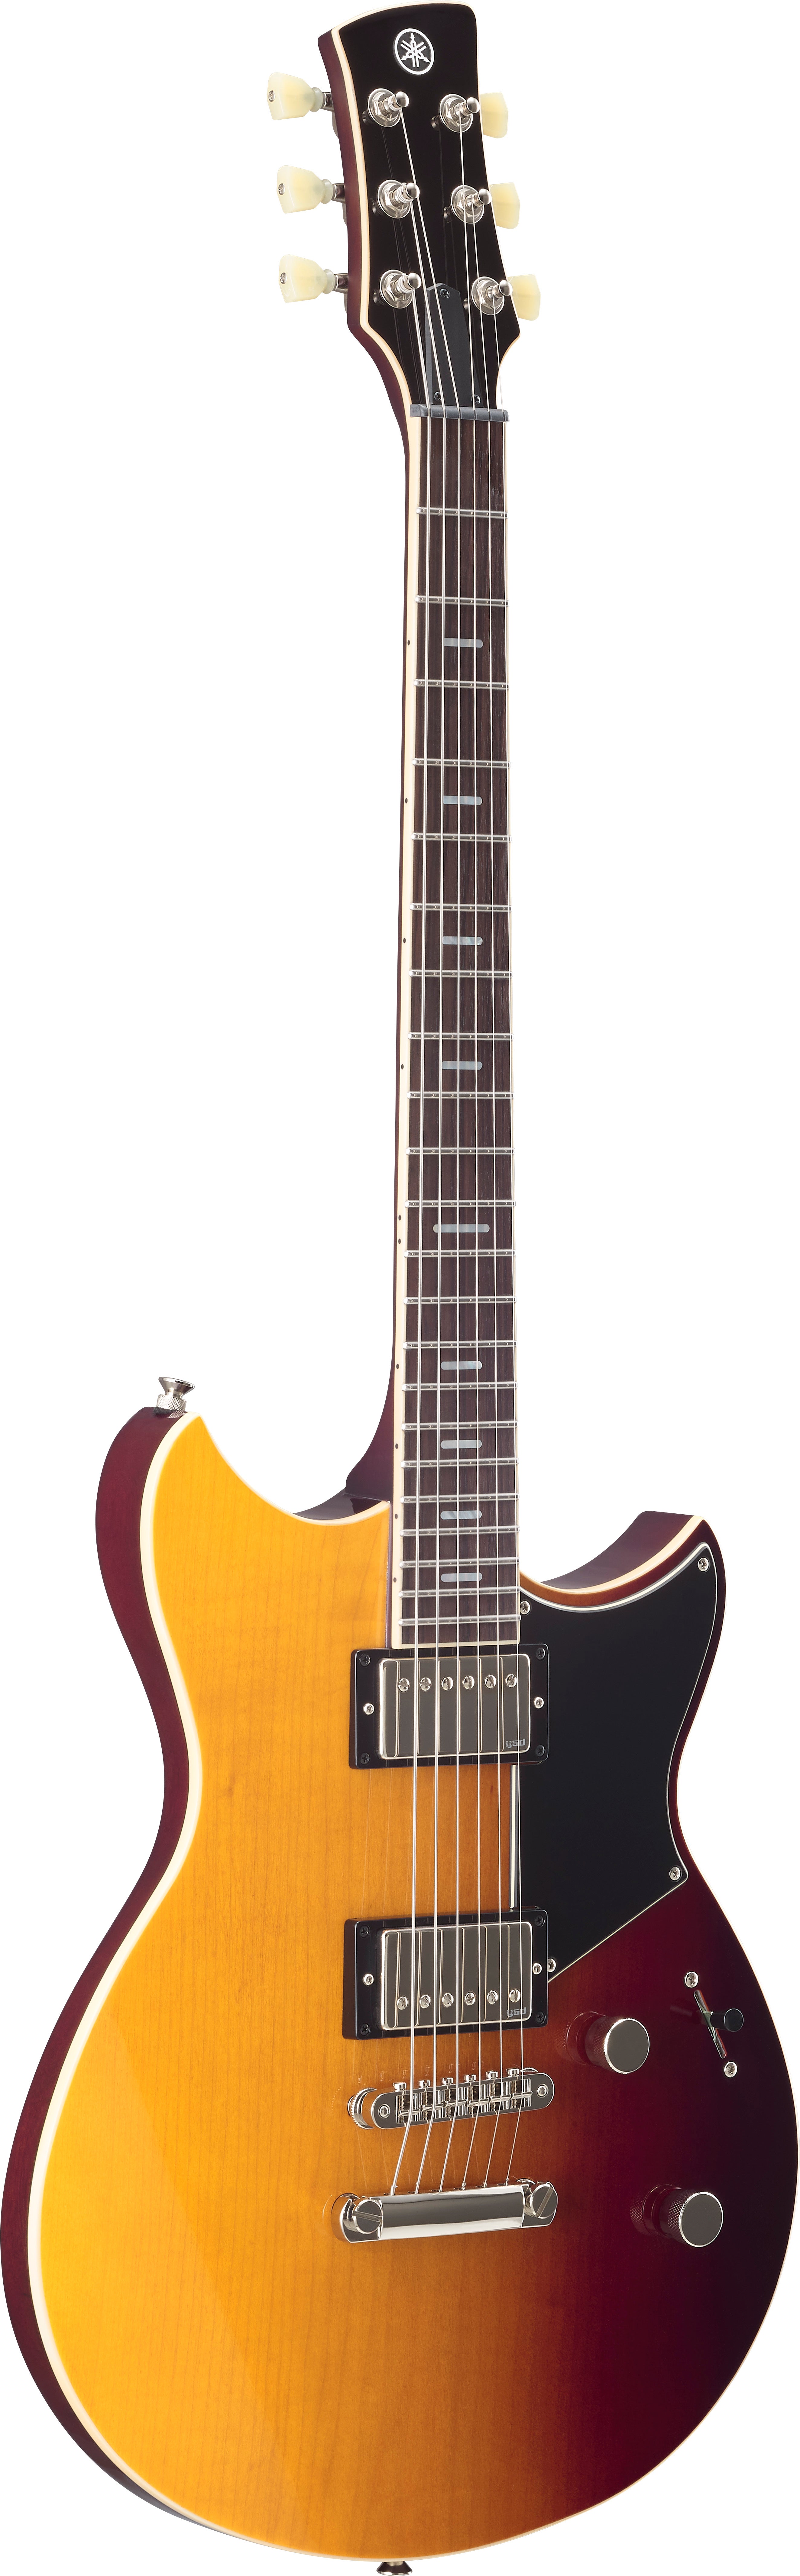 Yamaha Revstar Standard Rss20 Electric Guitar - Sunset Burst 